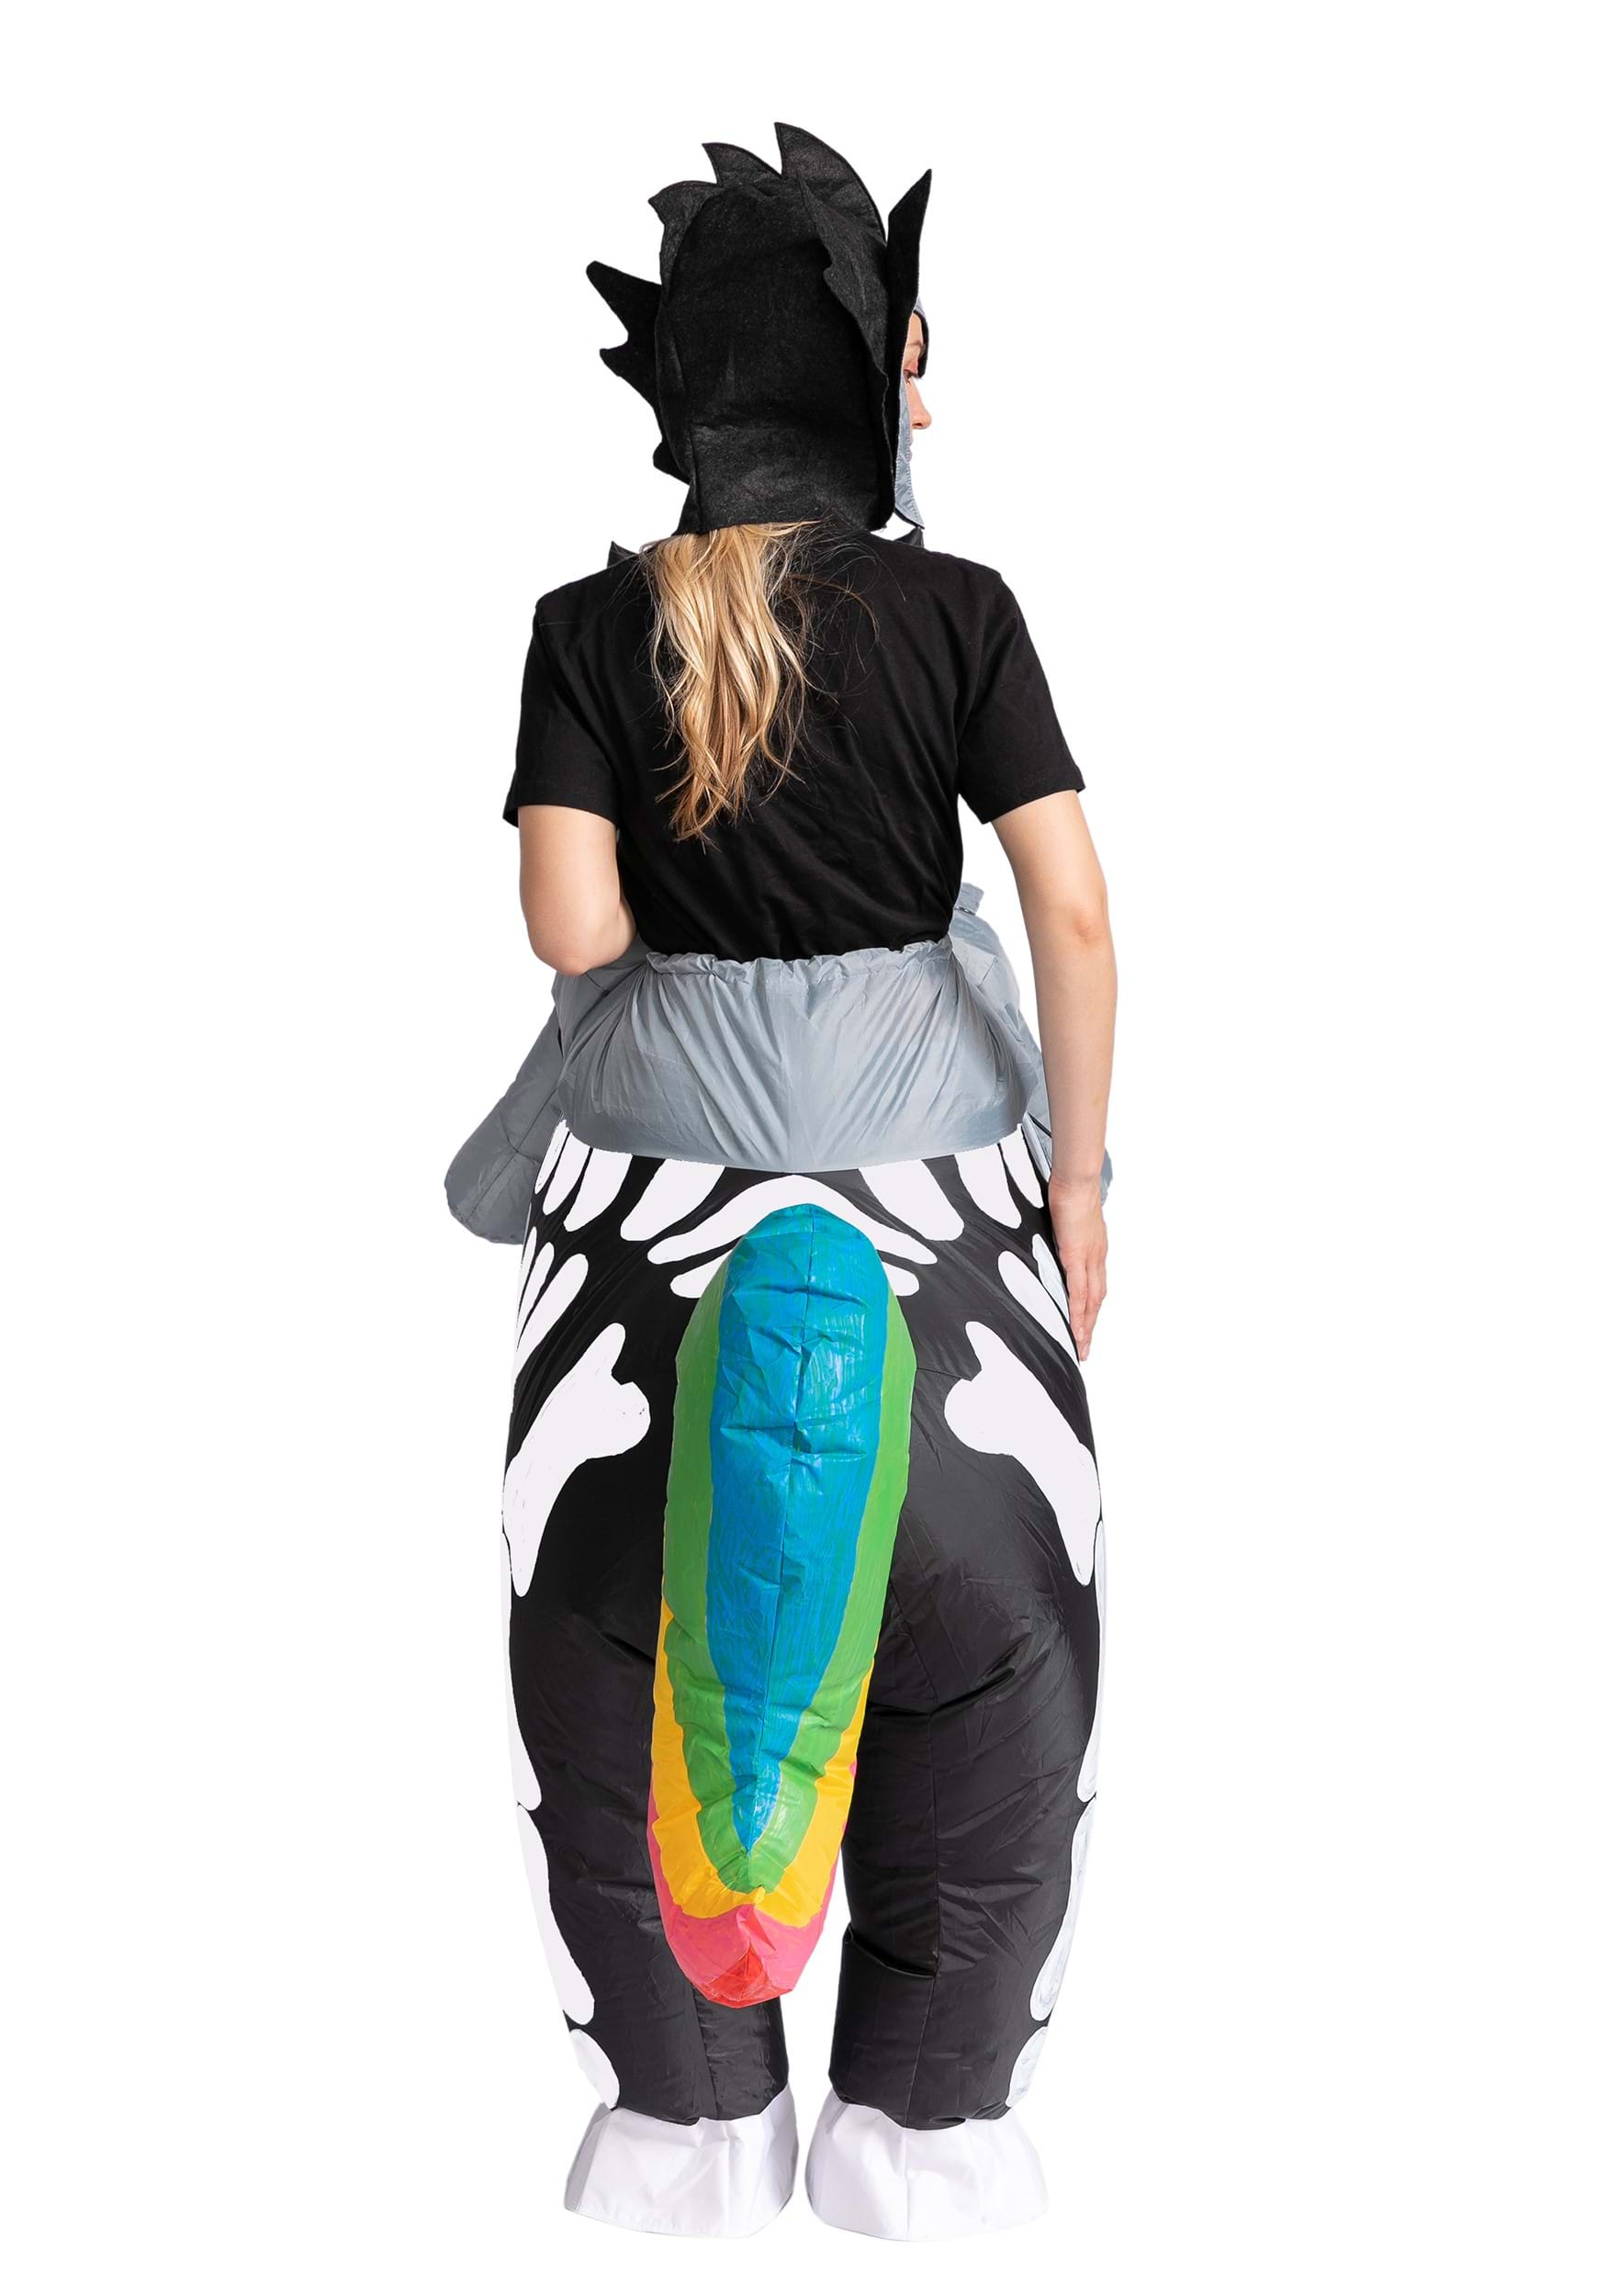 Inflatable Adult Riding-A-Skeleton Unicorn Costume